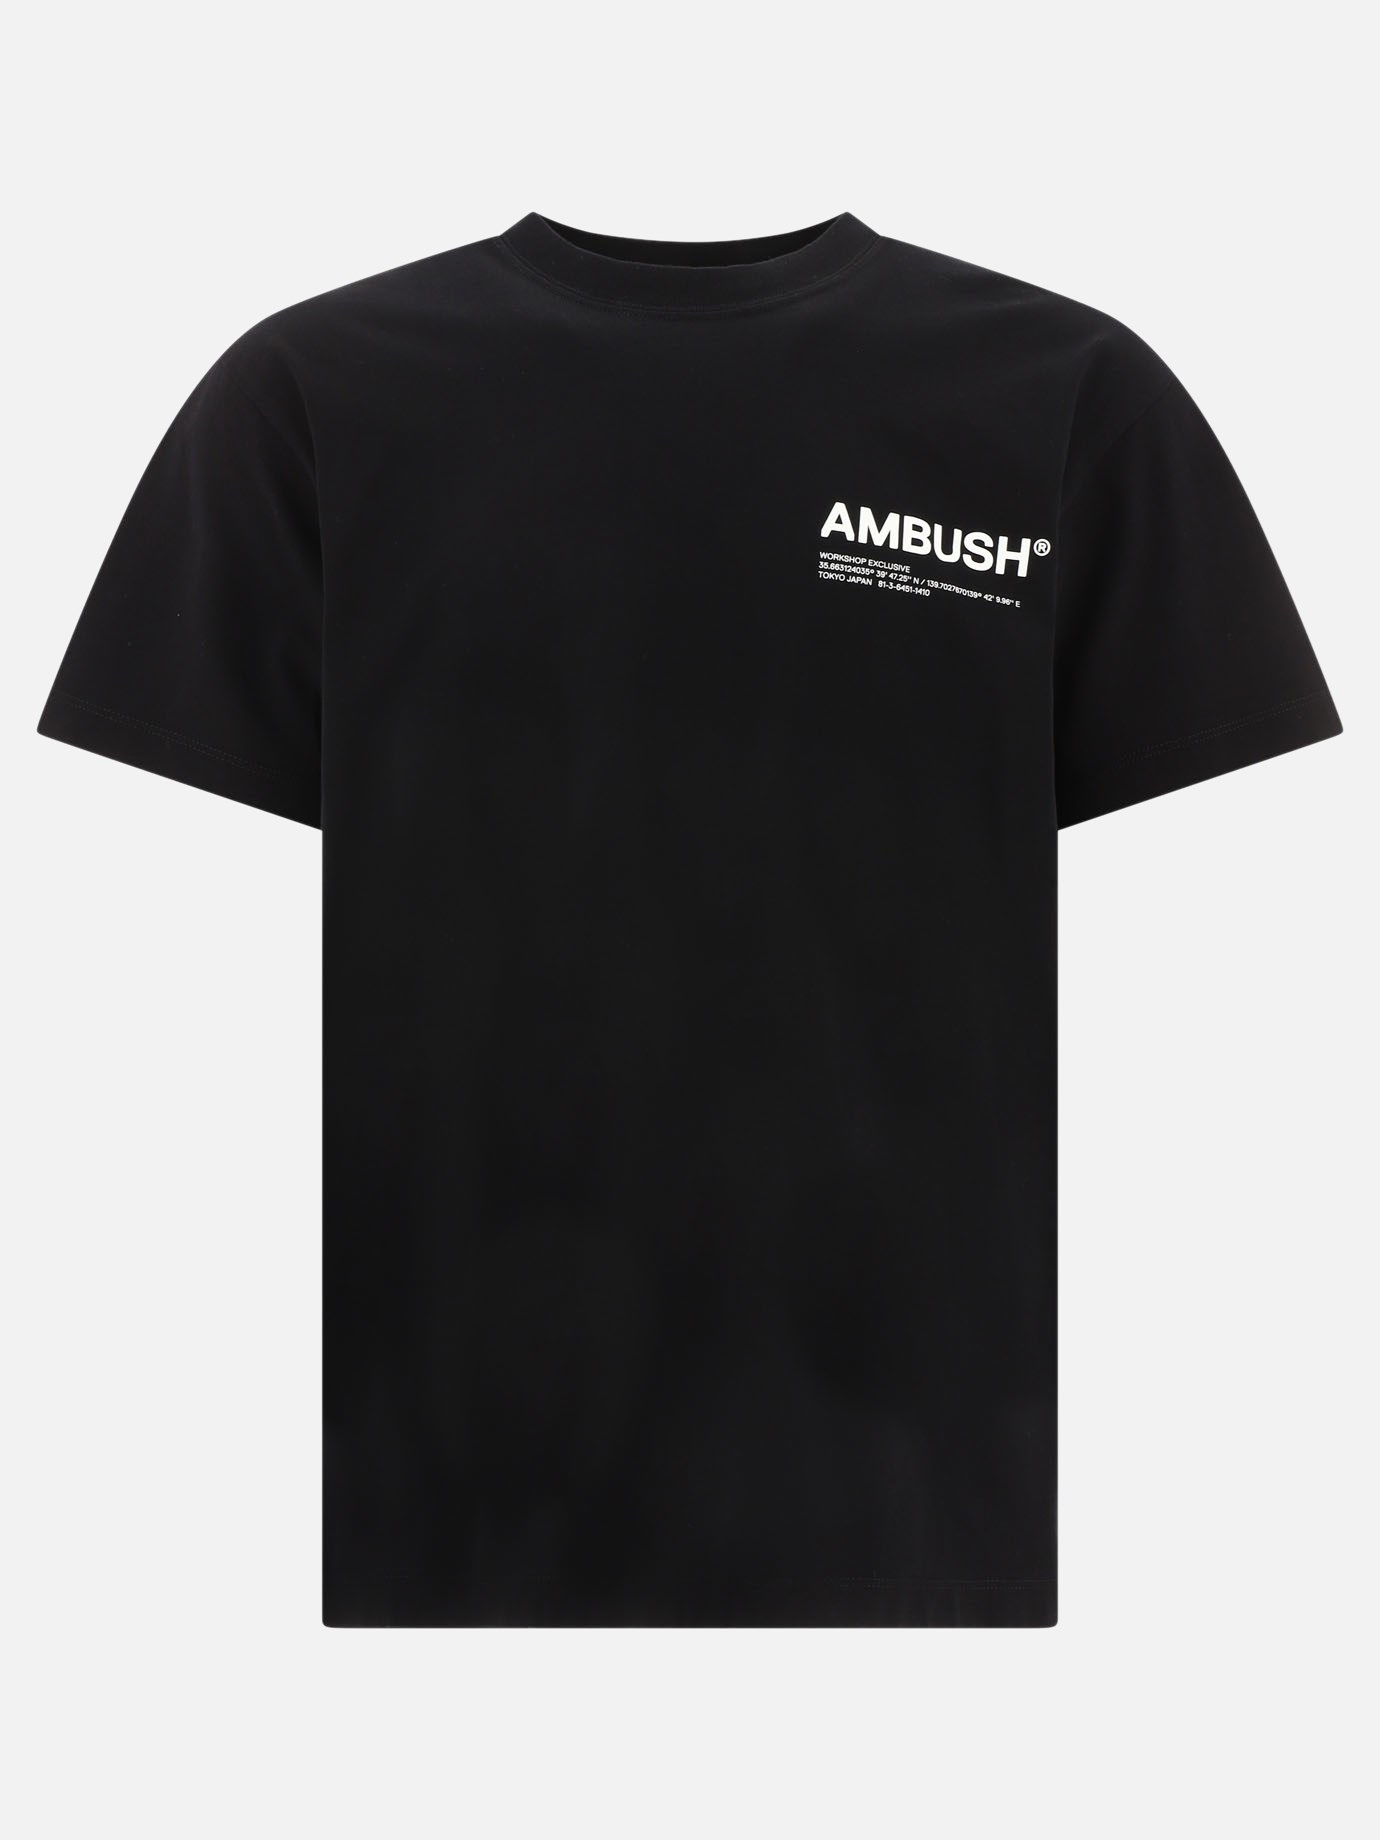  Workshop  t-shirtby Ambush - 2